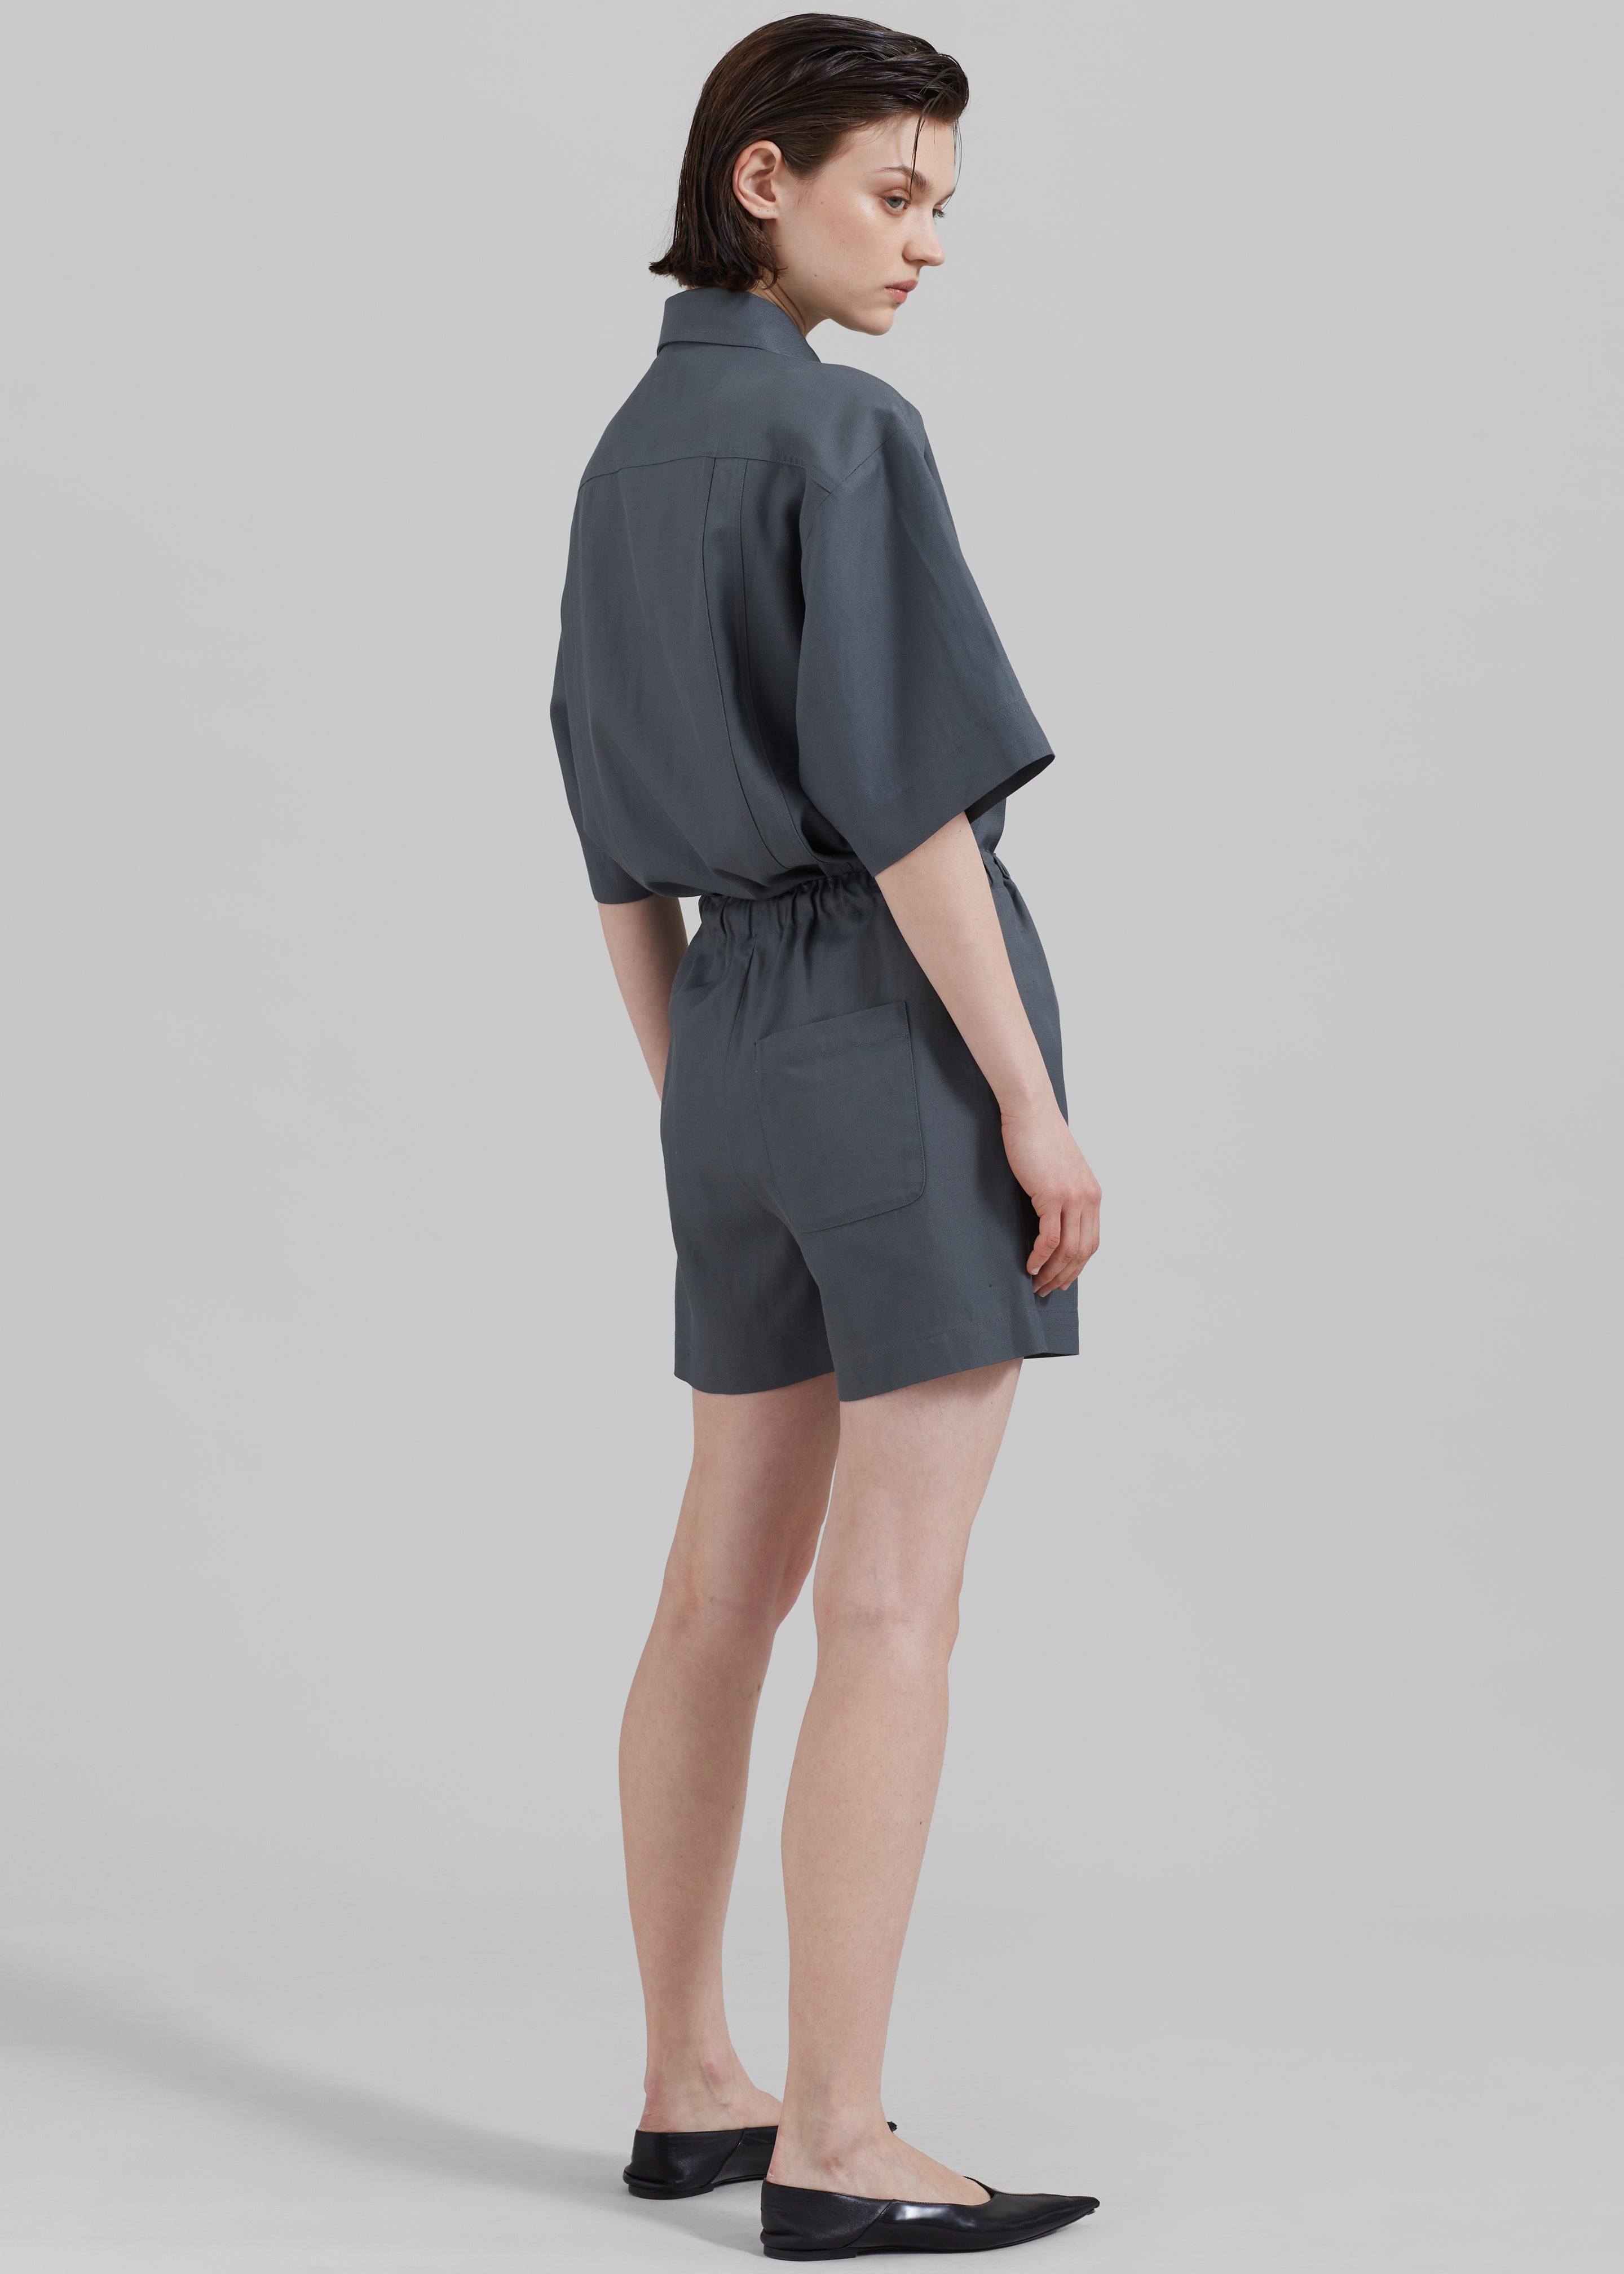 Loulou Studio Moheli Short Sleeve Shirt - Fjord Grey - 8